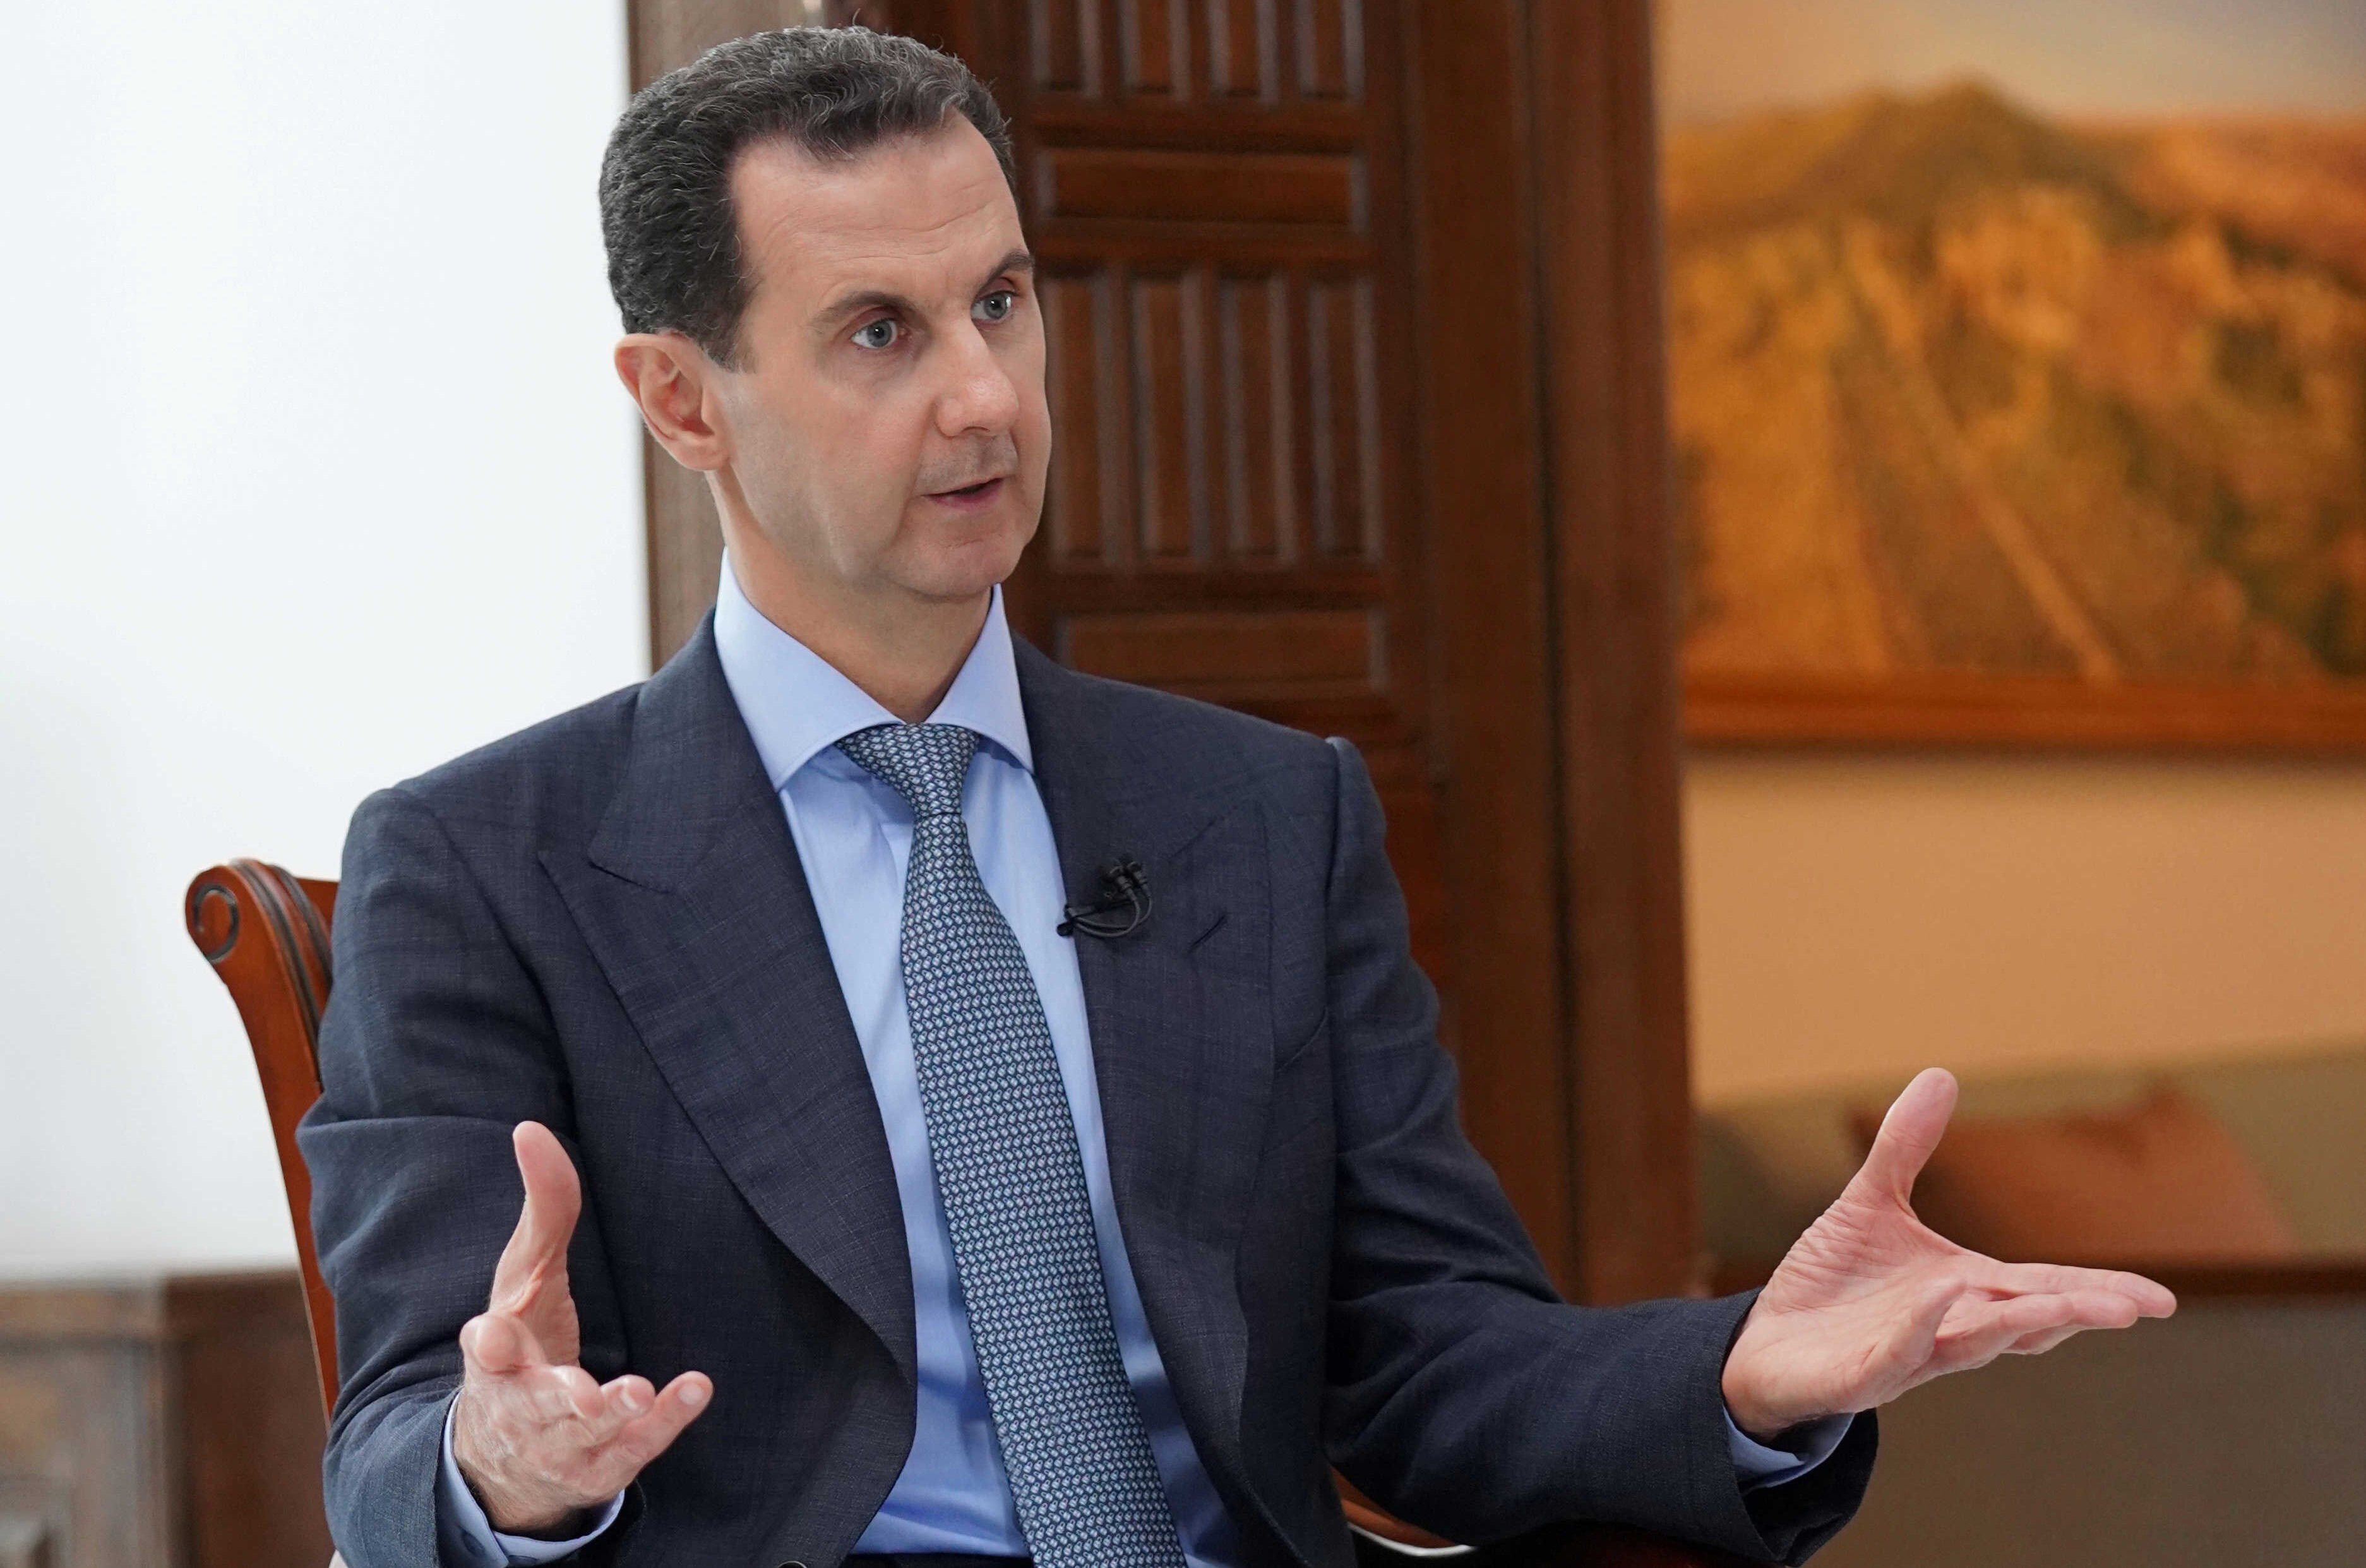 Saudi Arabia To Invite Syria’s Al-Assad To Upcoming Arab League Summit - Report